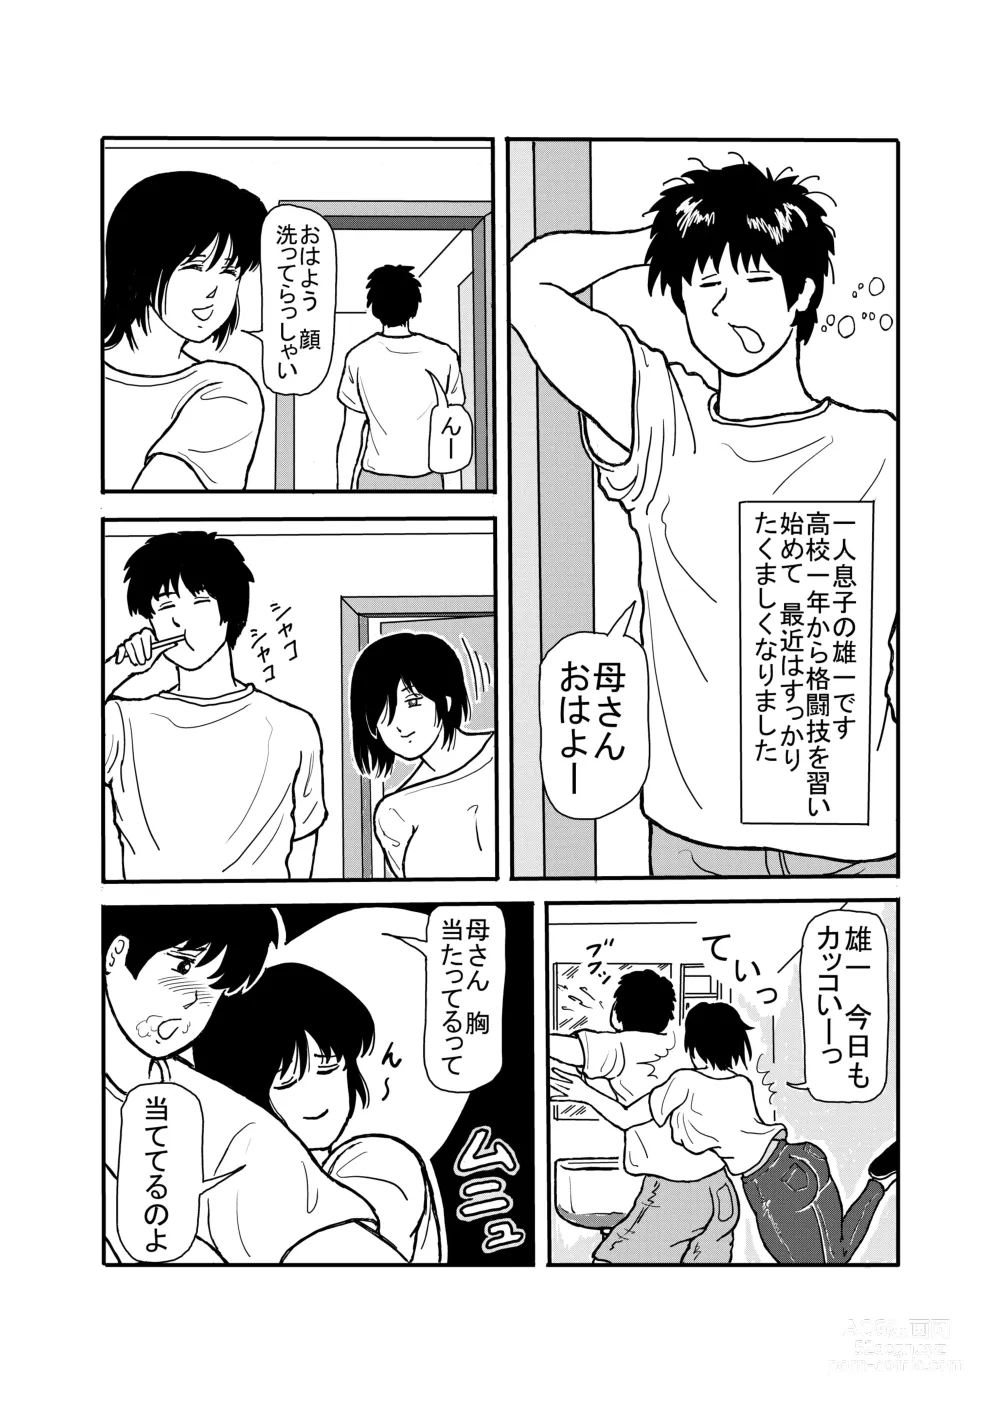 Page 6 of doujinshi 息子と二人きりで暮らすことになりました―初めての膣内射精―